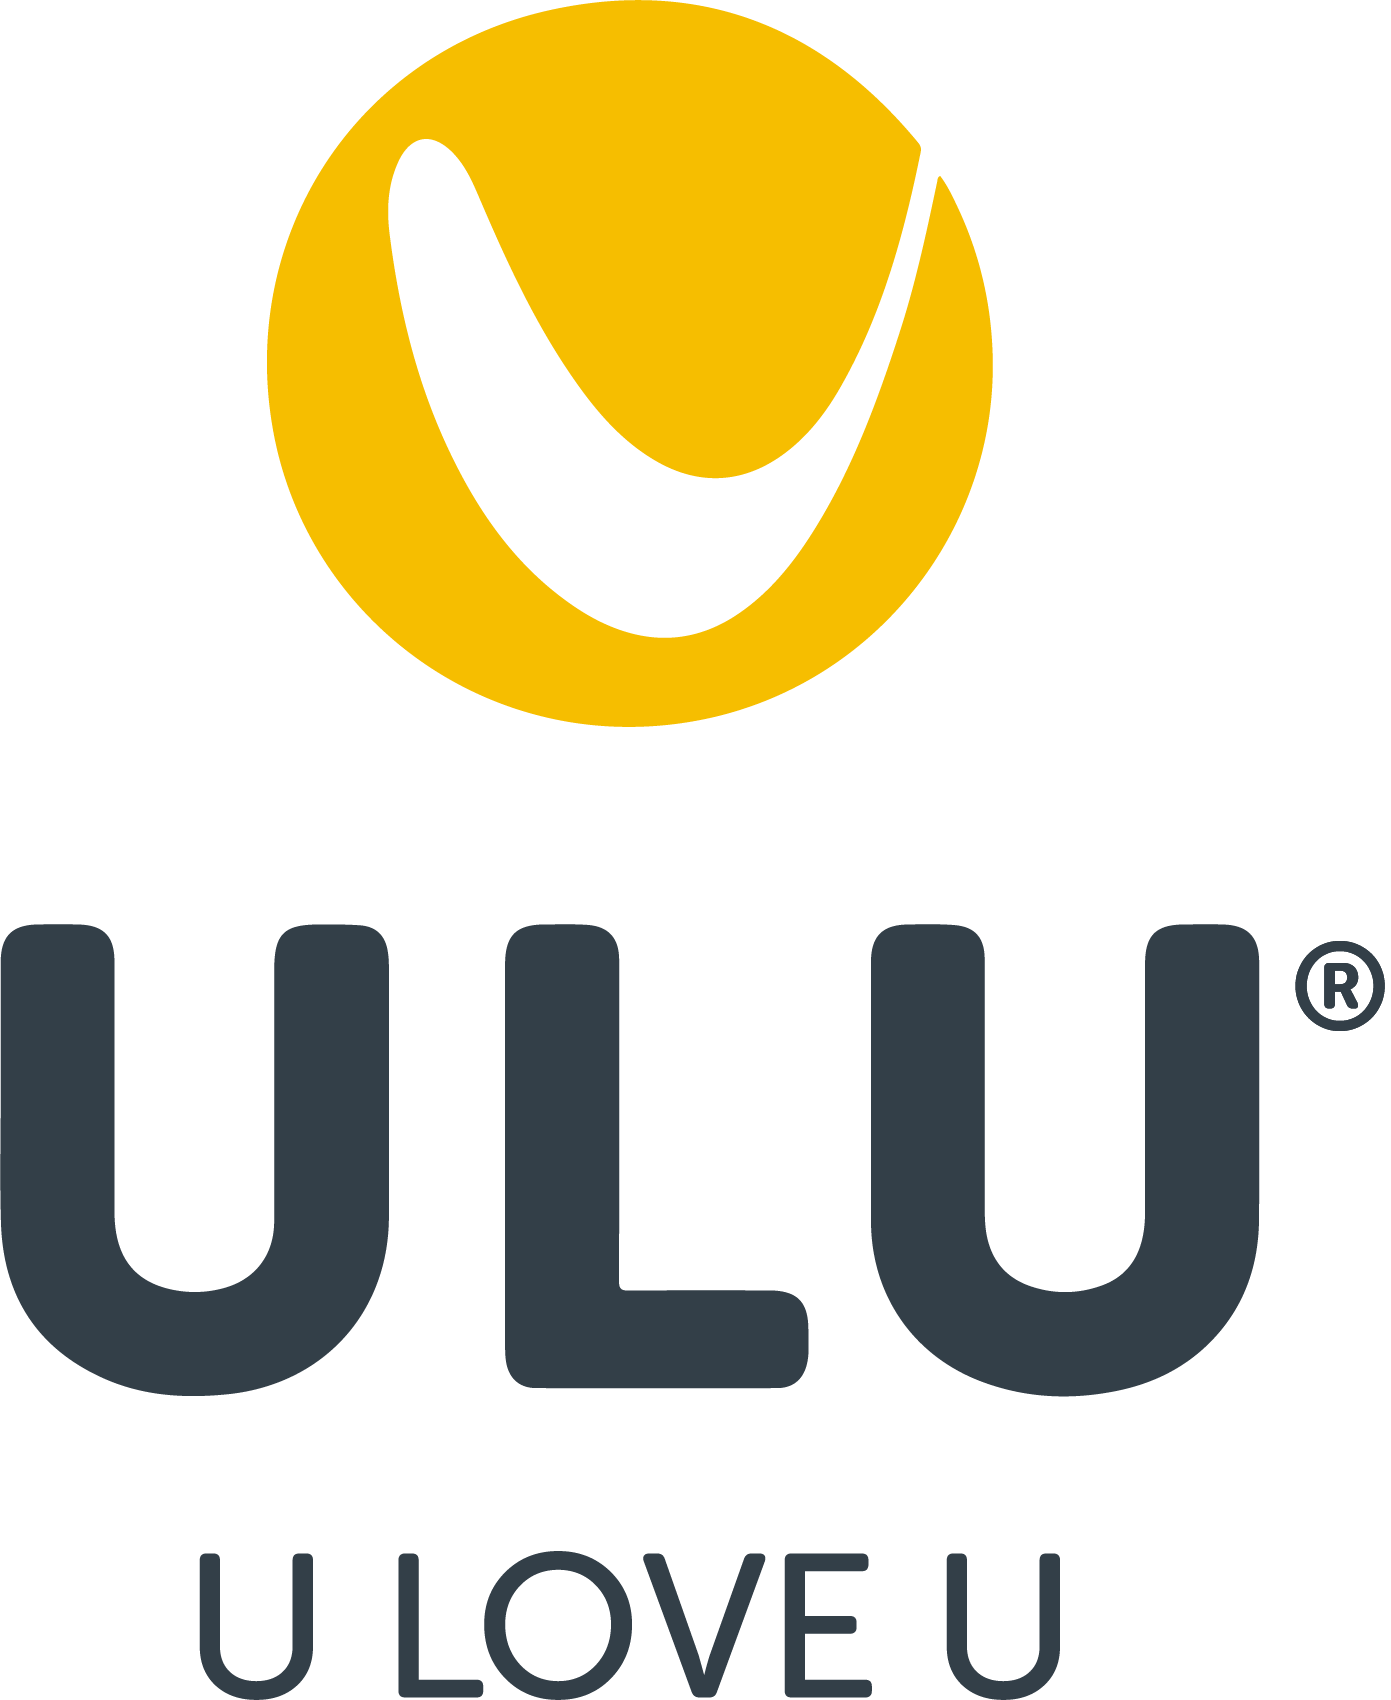 ULU Logo